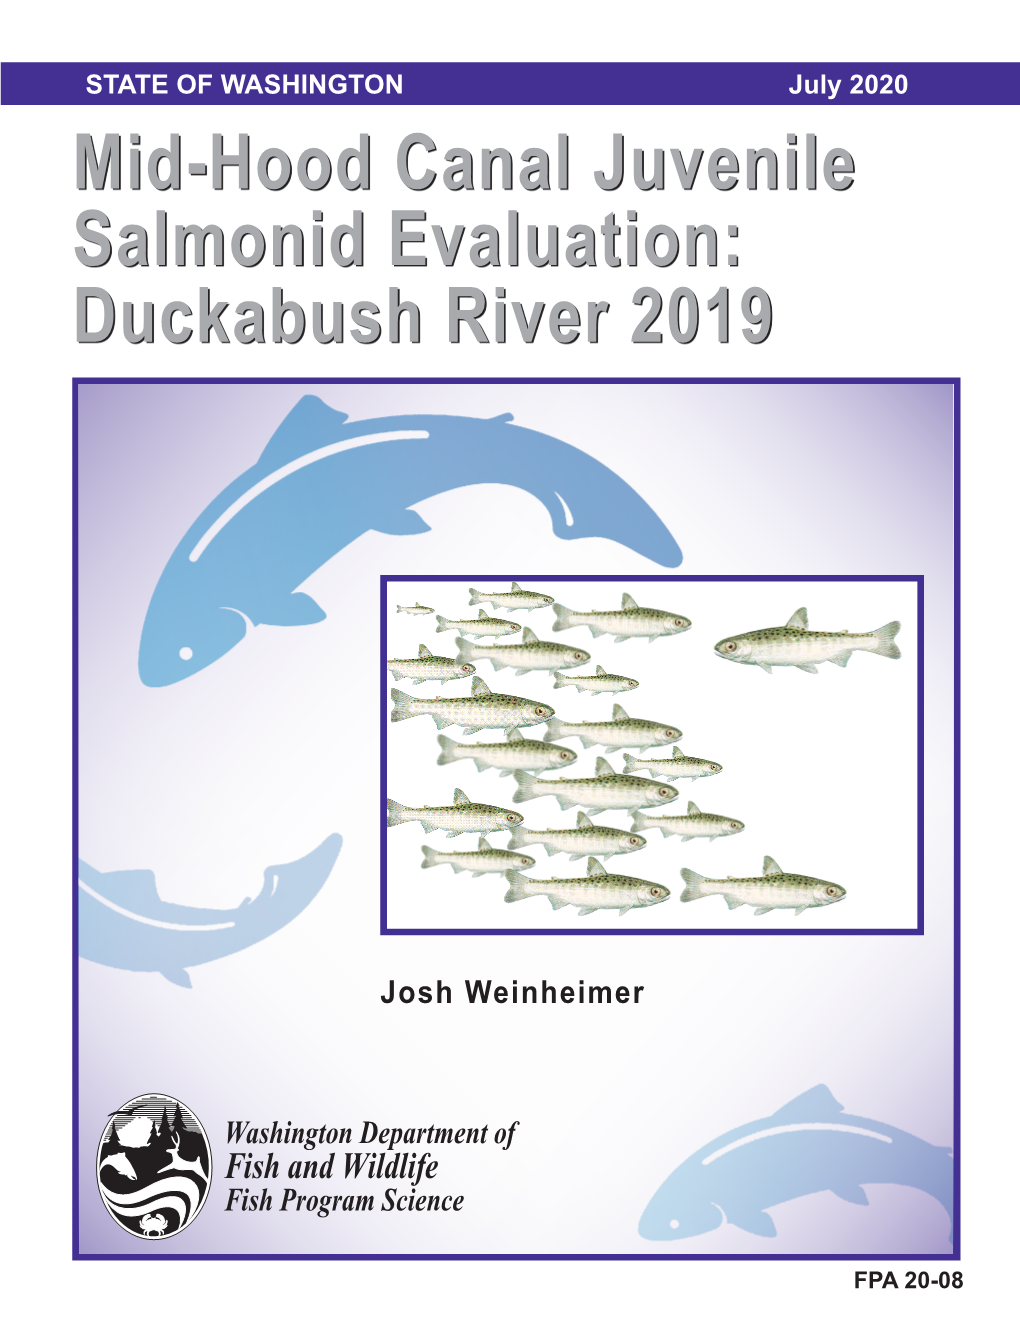 Mid-Hood Canal Juvenile Salmonid Evaluation Duckabush River 2019